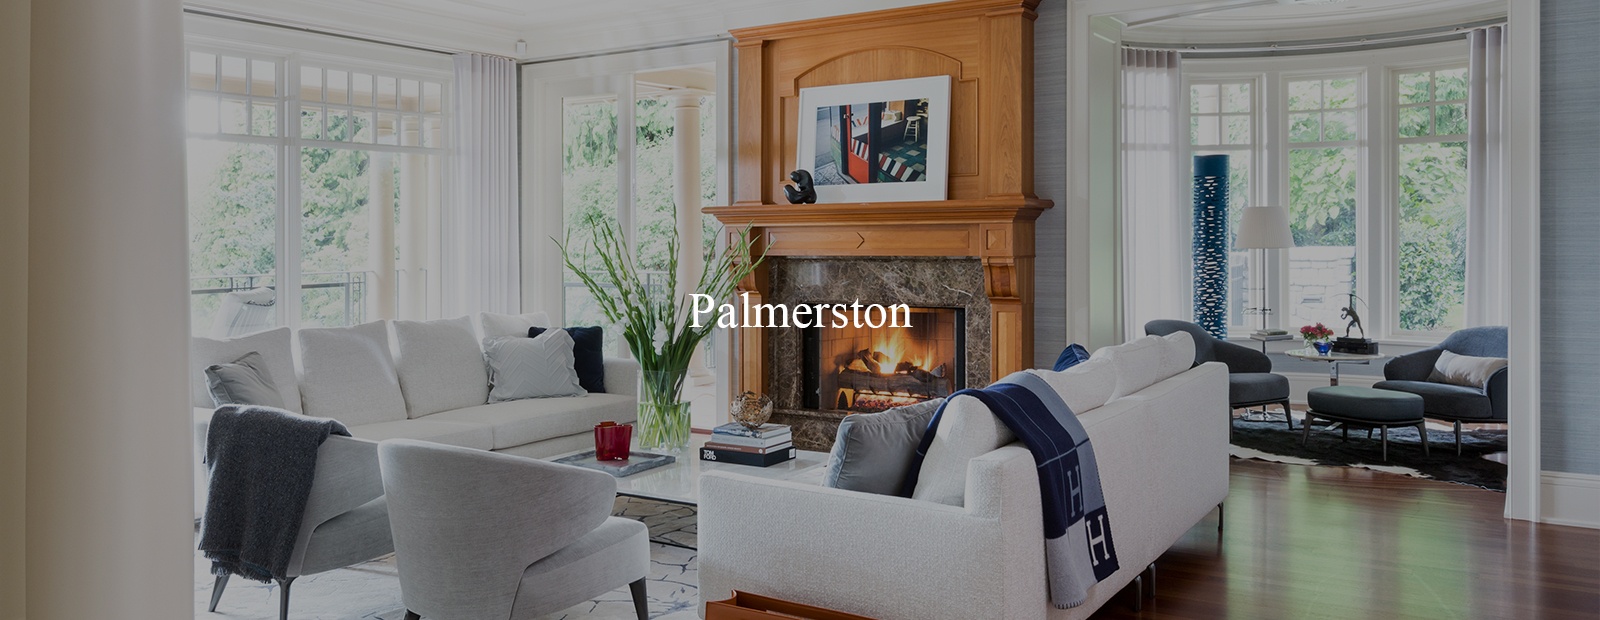 Palmerston - Interior Design Company Vancouver